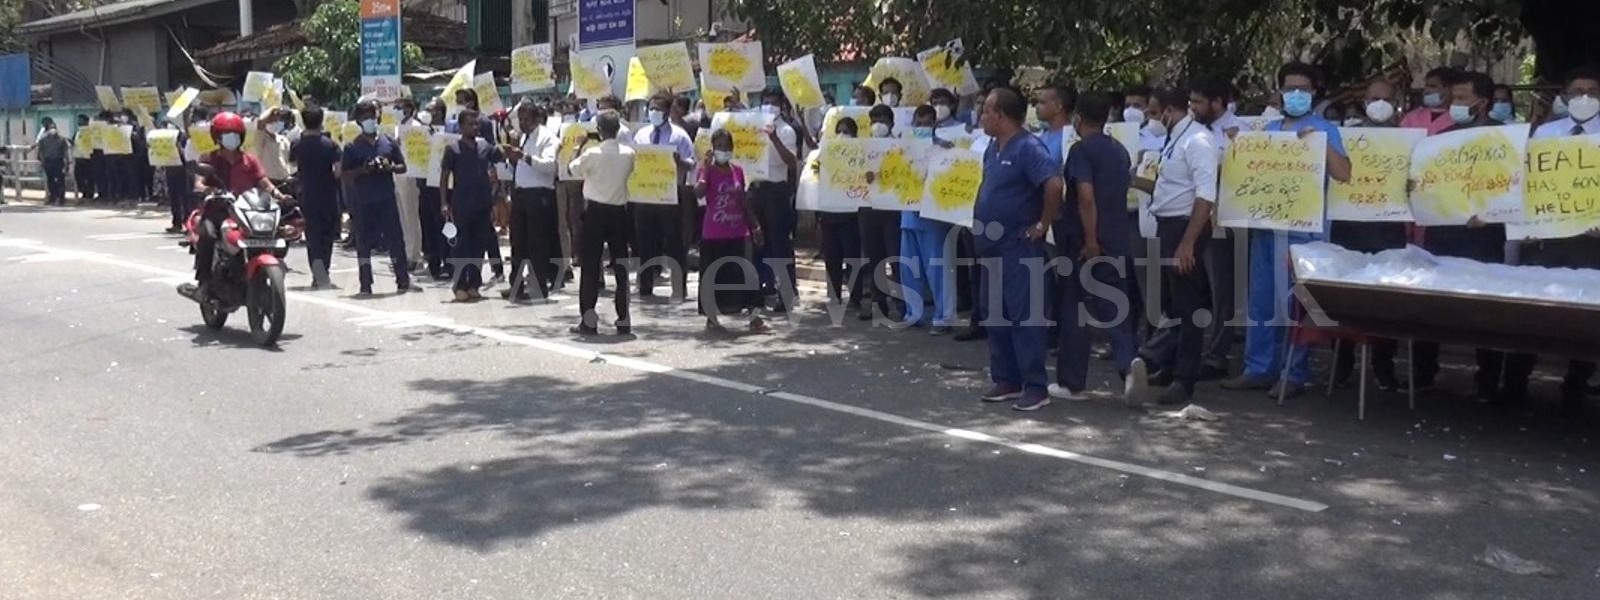 Hospital staff protest against medicine shortage